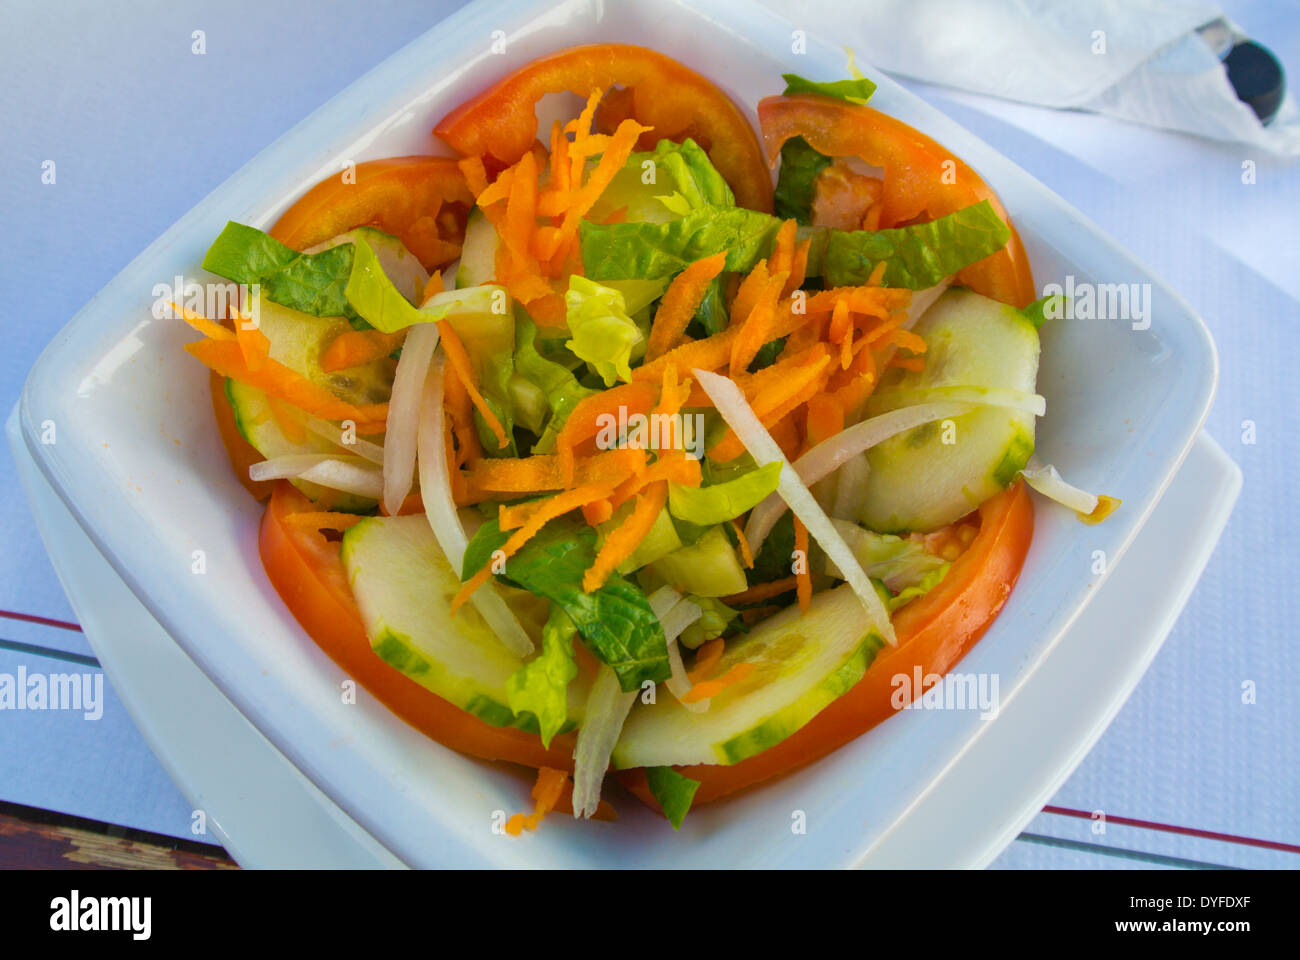 Ensalada mixta, mixed salad, Arrecife, Lanzarote, Canary Islands, Spain, Europe Stock Photo